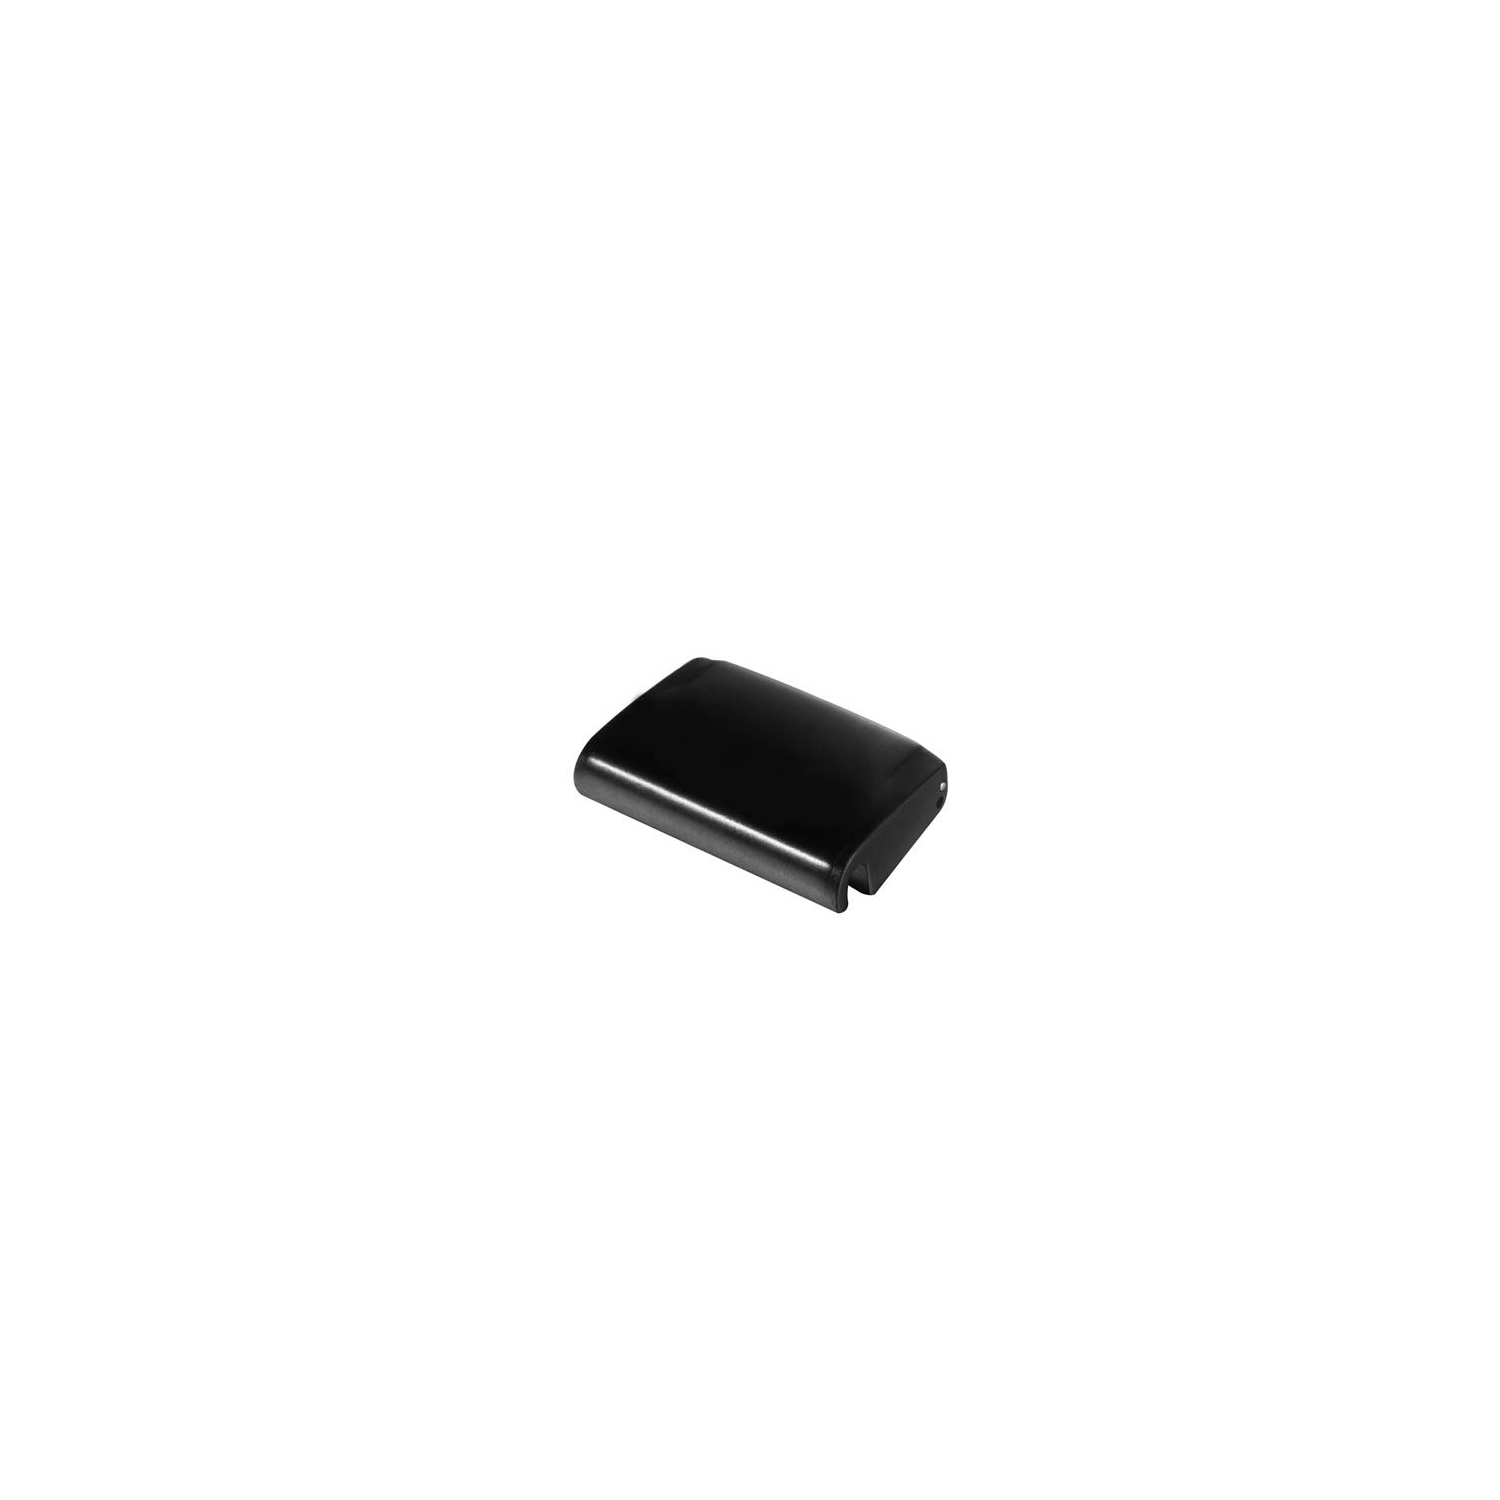 StrapsCo Stainless Steel Strap Adapter for Garmin Fenix 5 / 6 / 5S / 6S / 5X / 6X - 26mm - Black